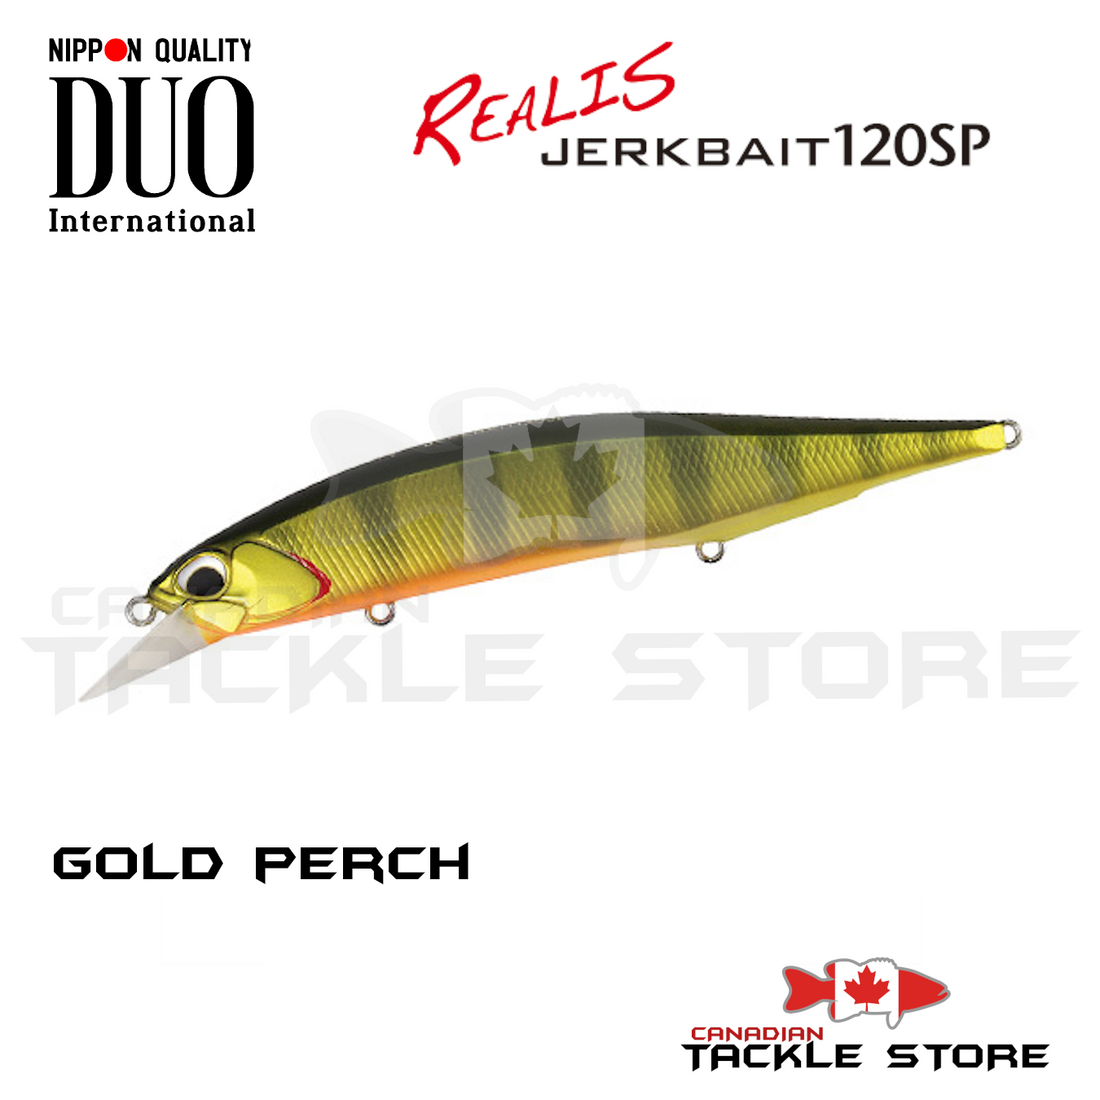 Duo Realis Jerkbait 120SP – Canadian Tackle Store